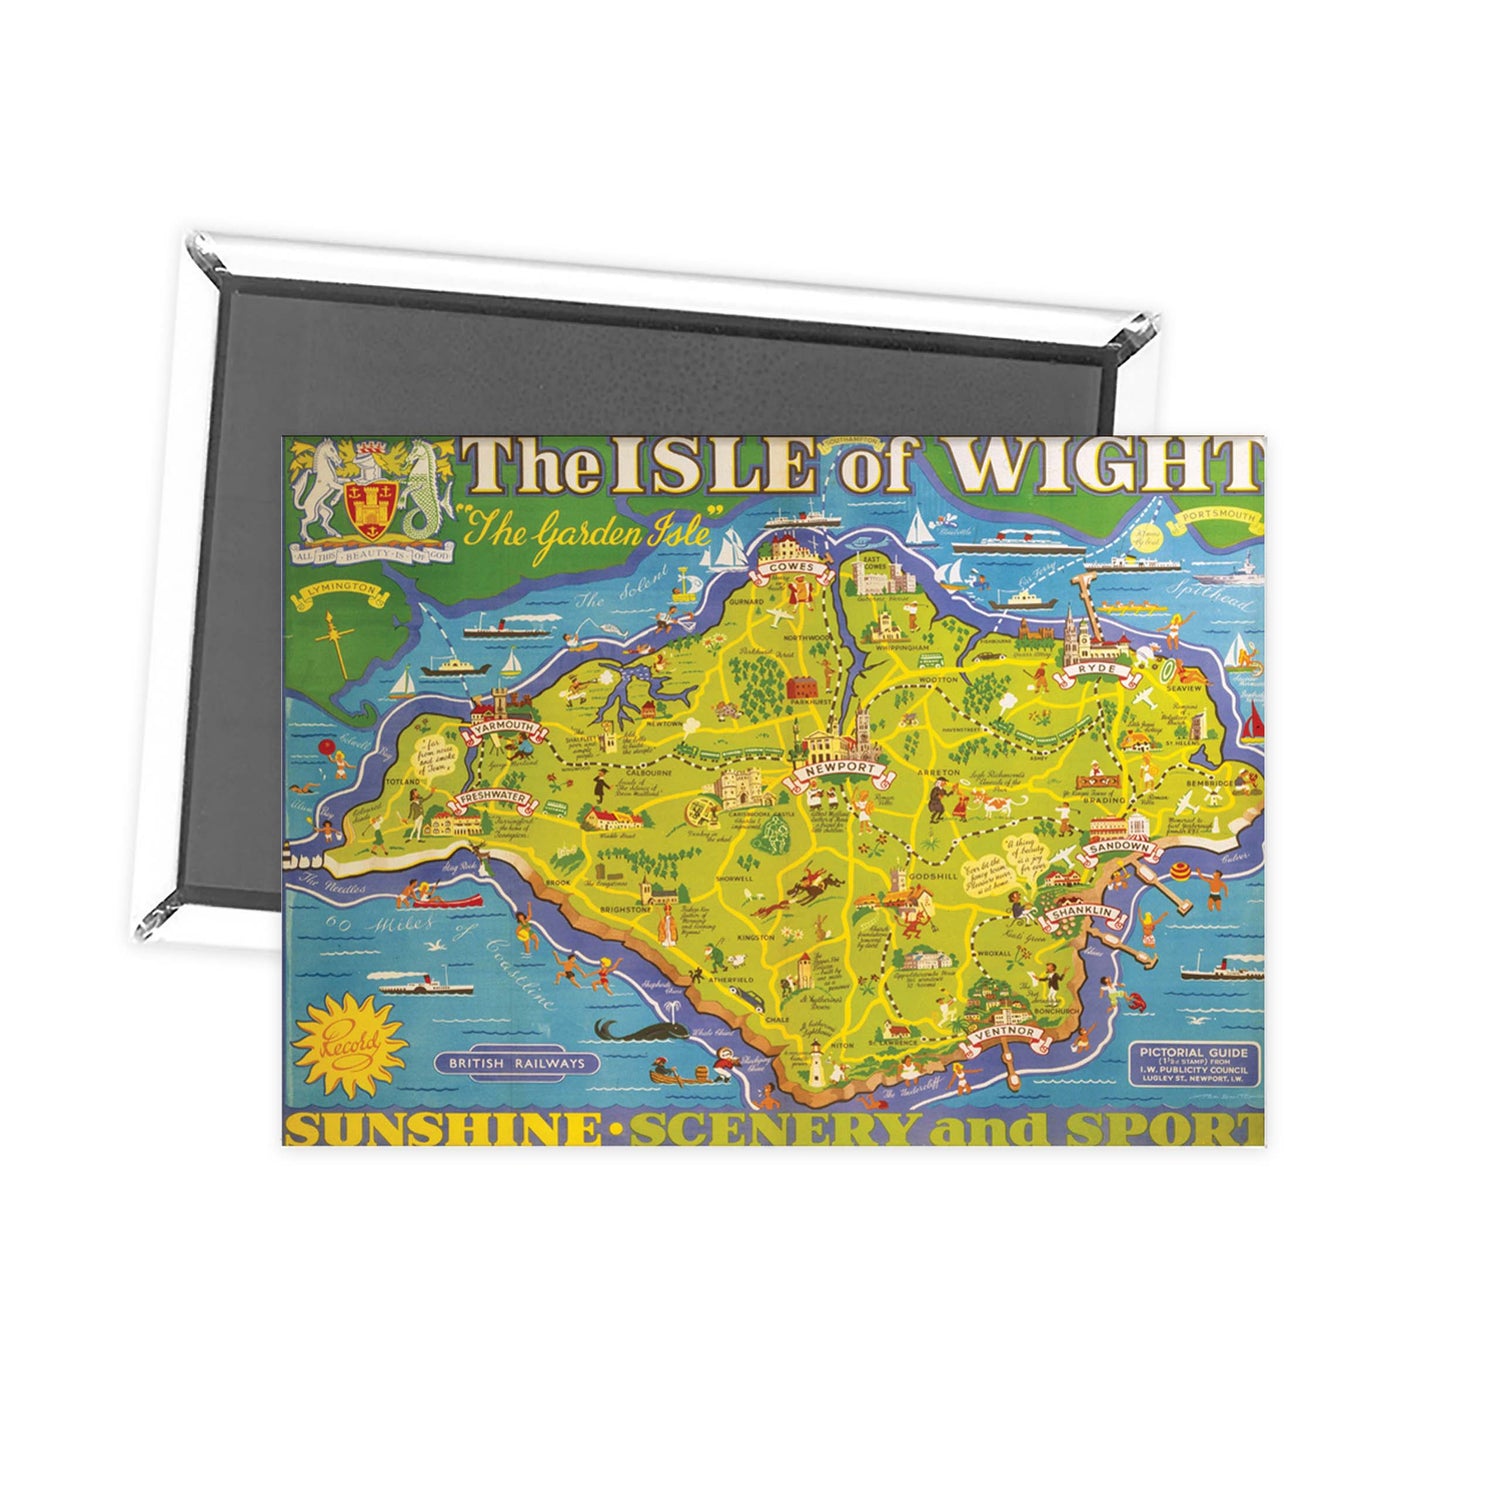 Isle Of Wight - Sunshine, Scenery and Sport Garden isle poster Fridge Magnet